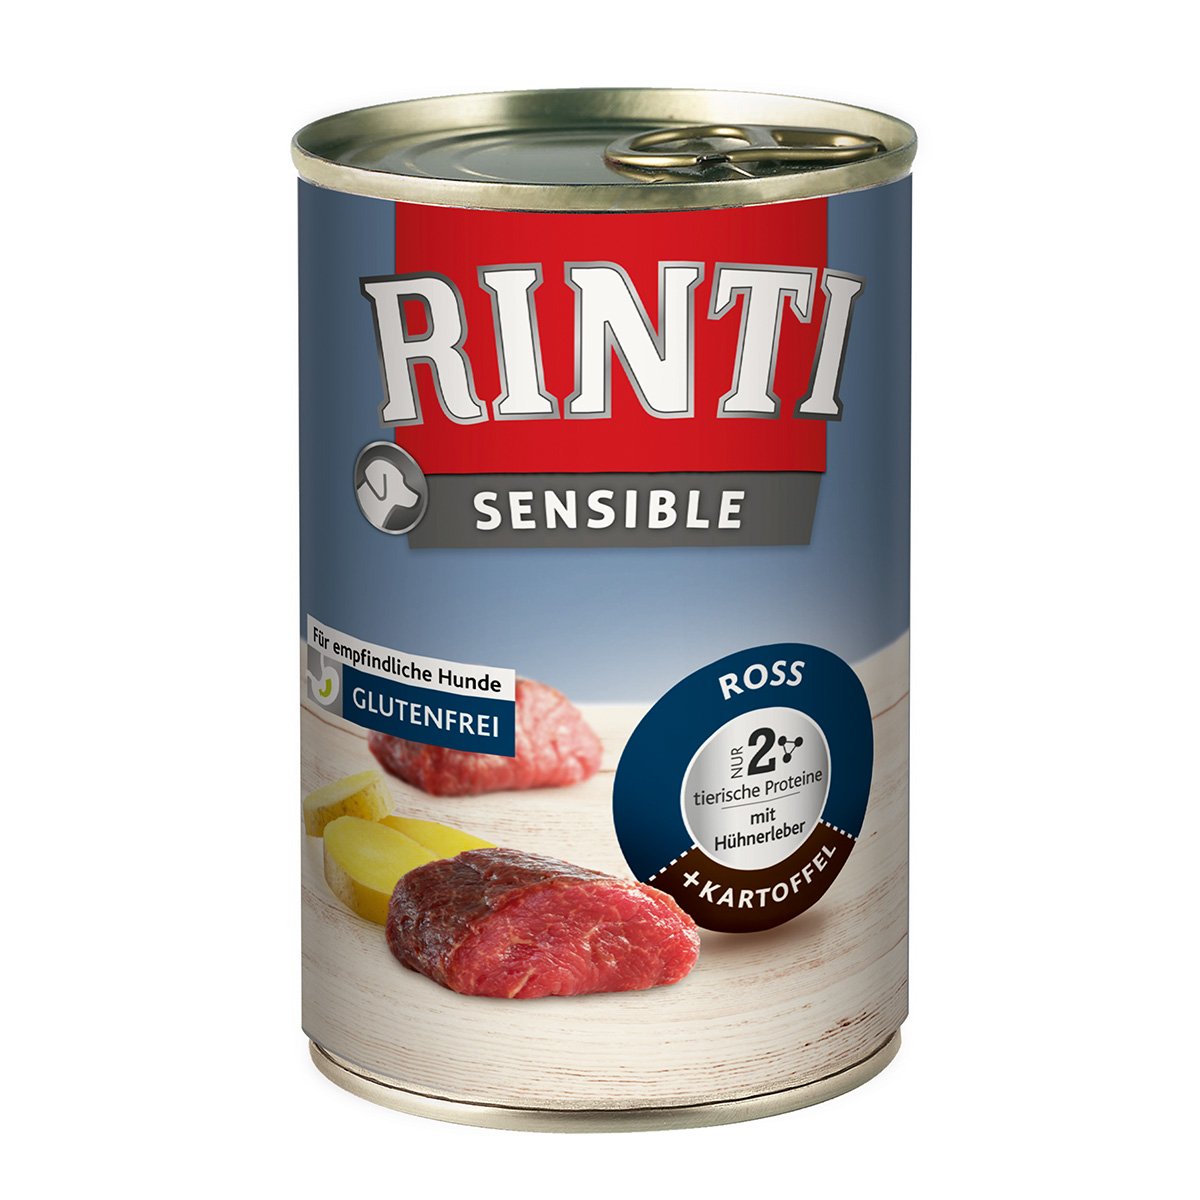 Rinti Sensible Ross & Hühnerleber & Kartoffel 6X400g